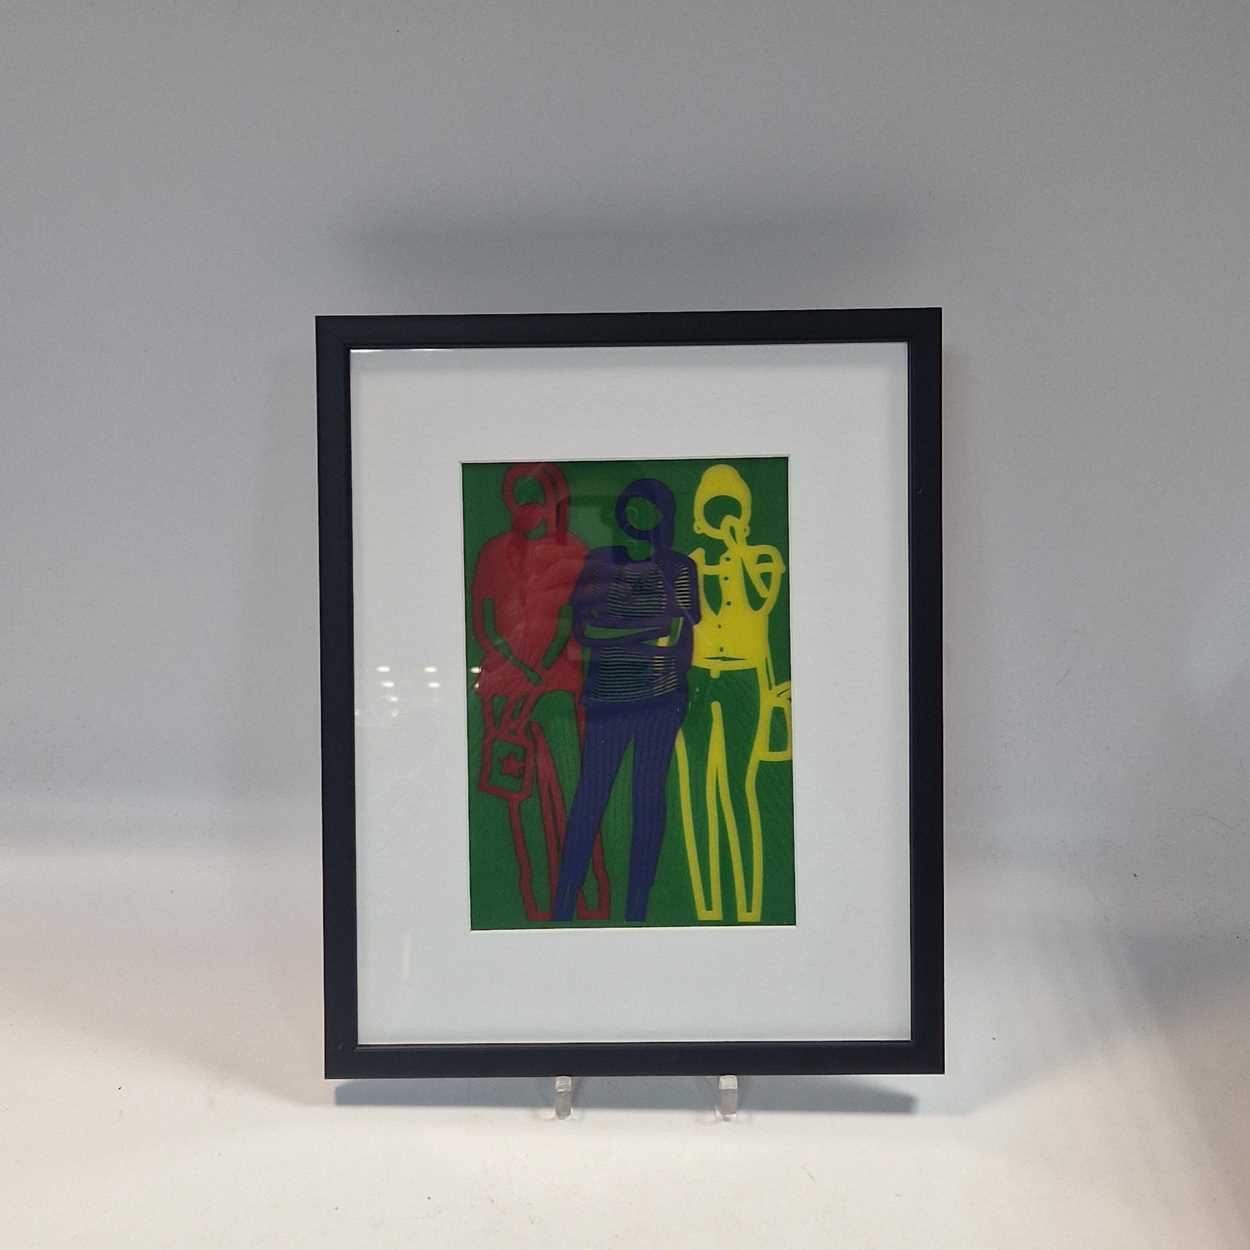 Julian Opie (1958-), Krobath, 3D Lenticular Moving Image, In Vibrant Colour, Framed, 2019 - Image 2 of 6